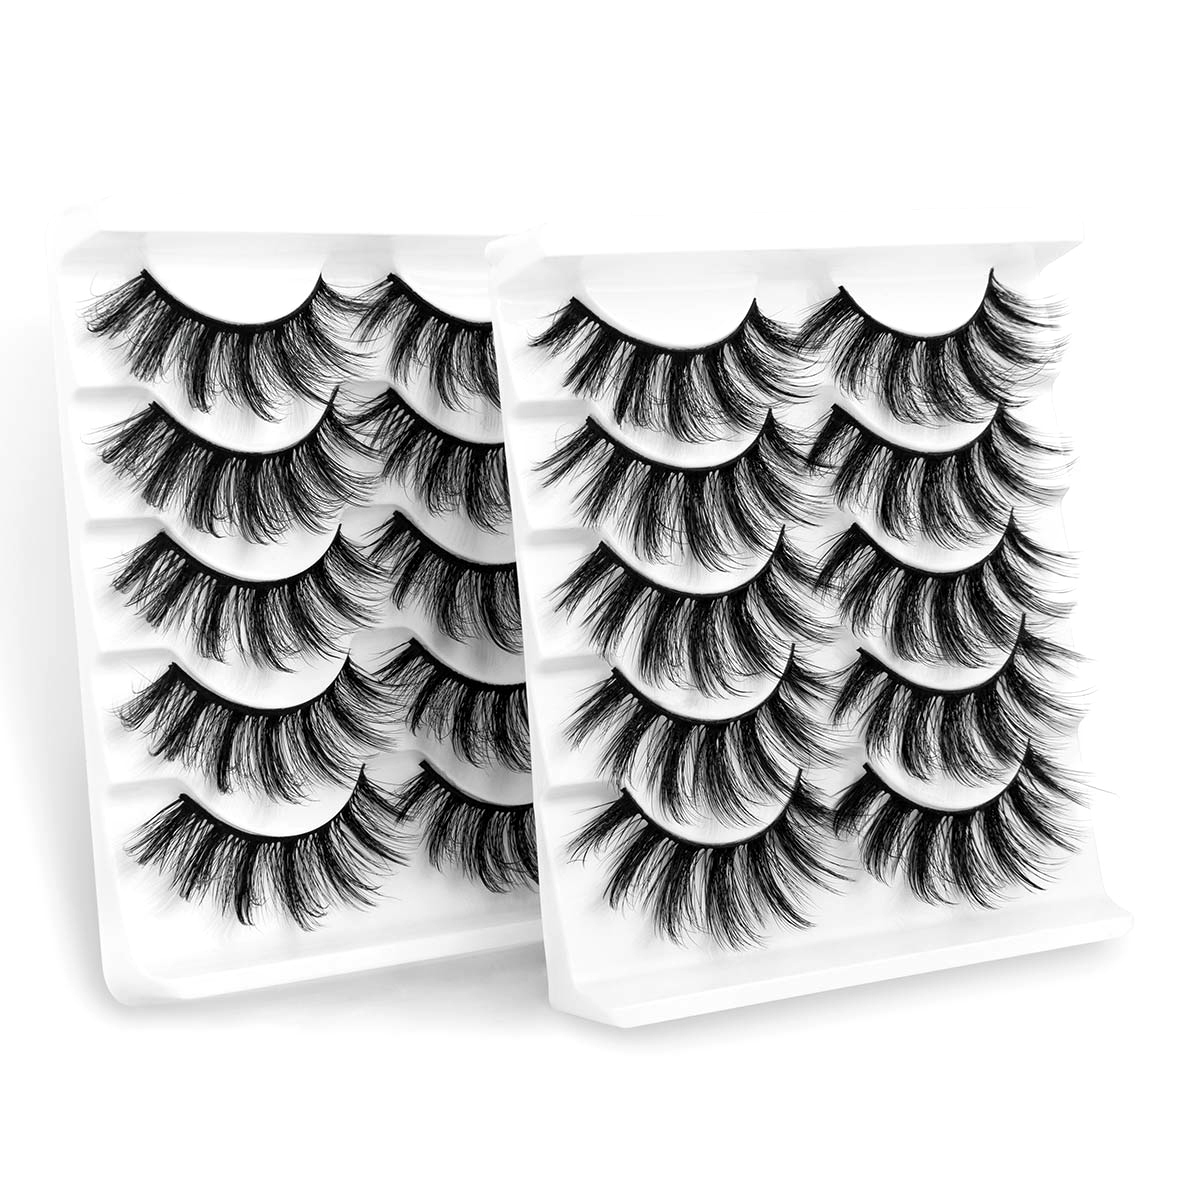 SEXYSHEEP 5Pairs 3D Mink Lashes False Eyelashes Natural/Thick Long Eye Lashes Wispy Makeup Beauty Extension Tools